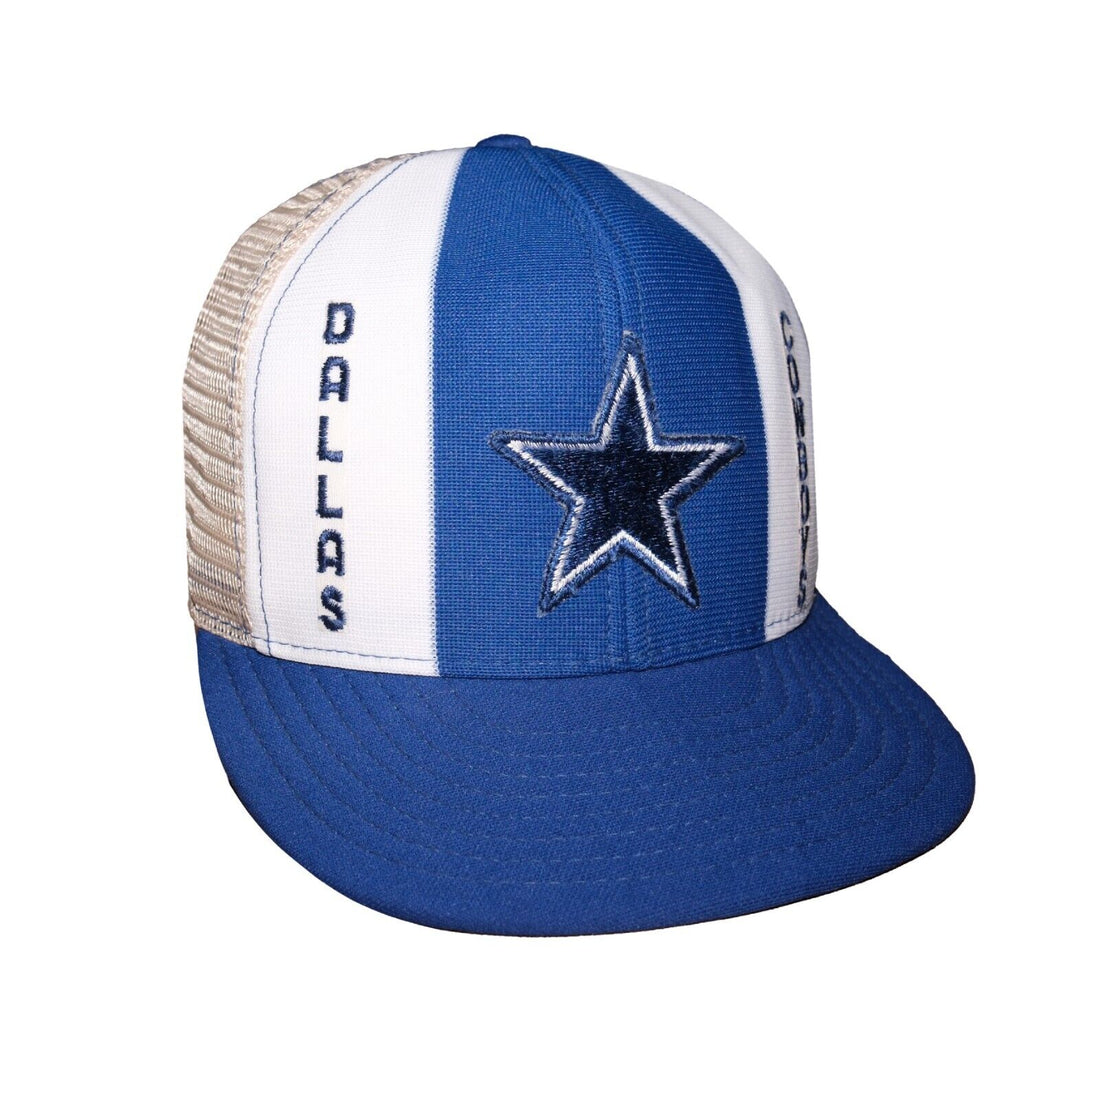 Vintage Dallas Cowboys Mesh Trucker Snapback Hat OSFA Blue 90s NFL